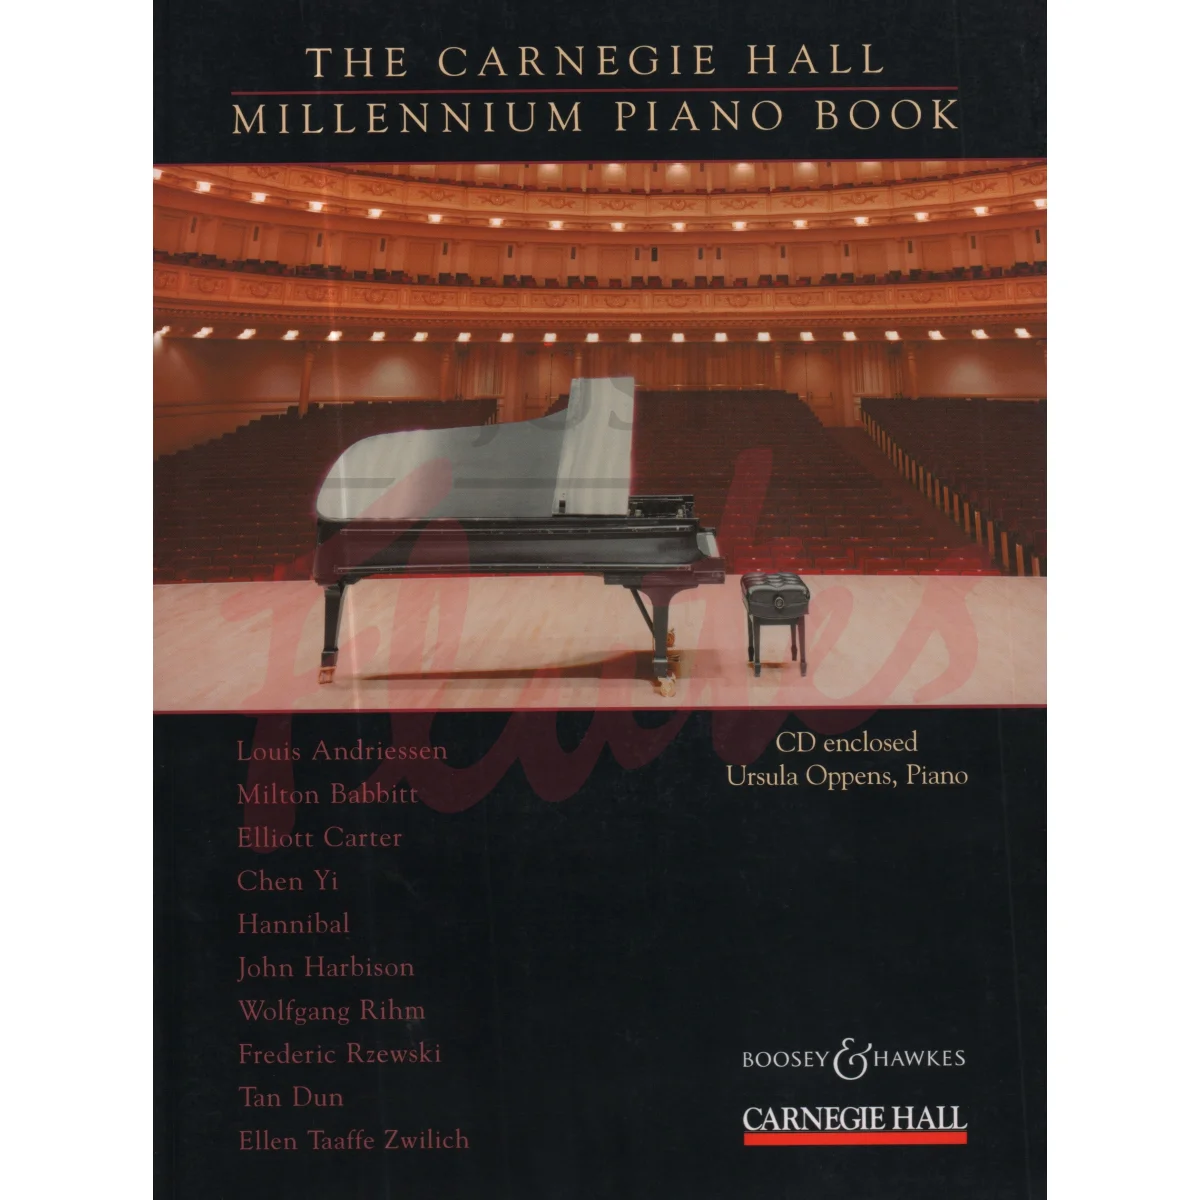 The Carnegie Hall Millennium Piano Book